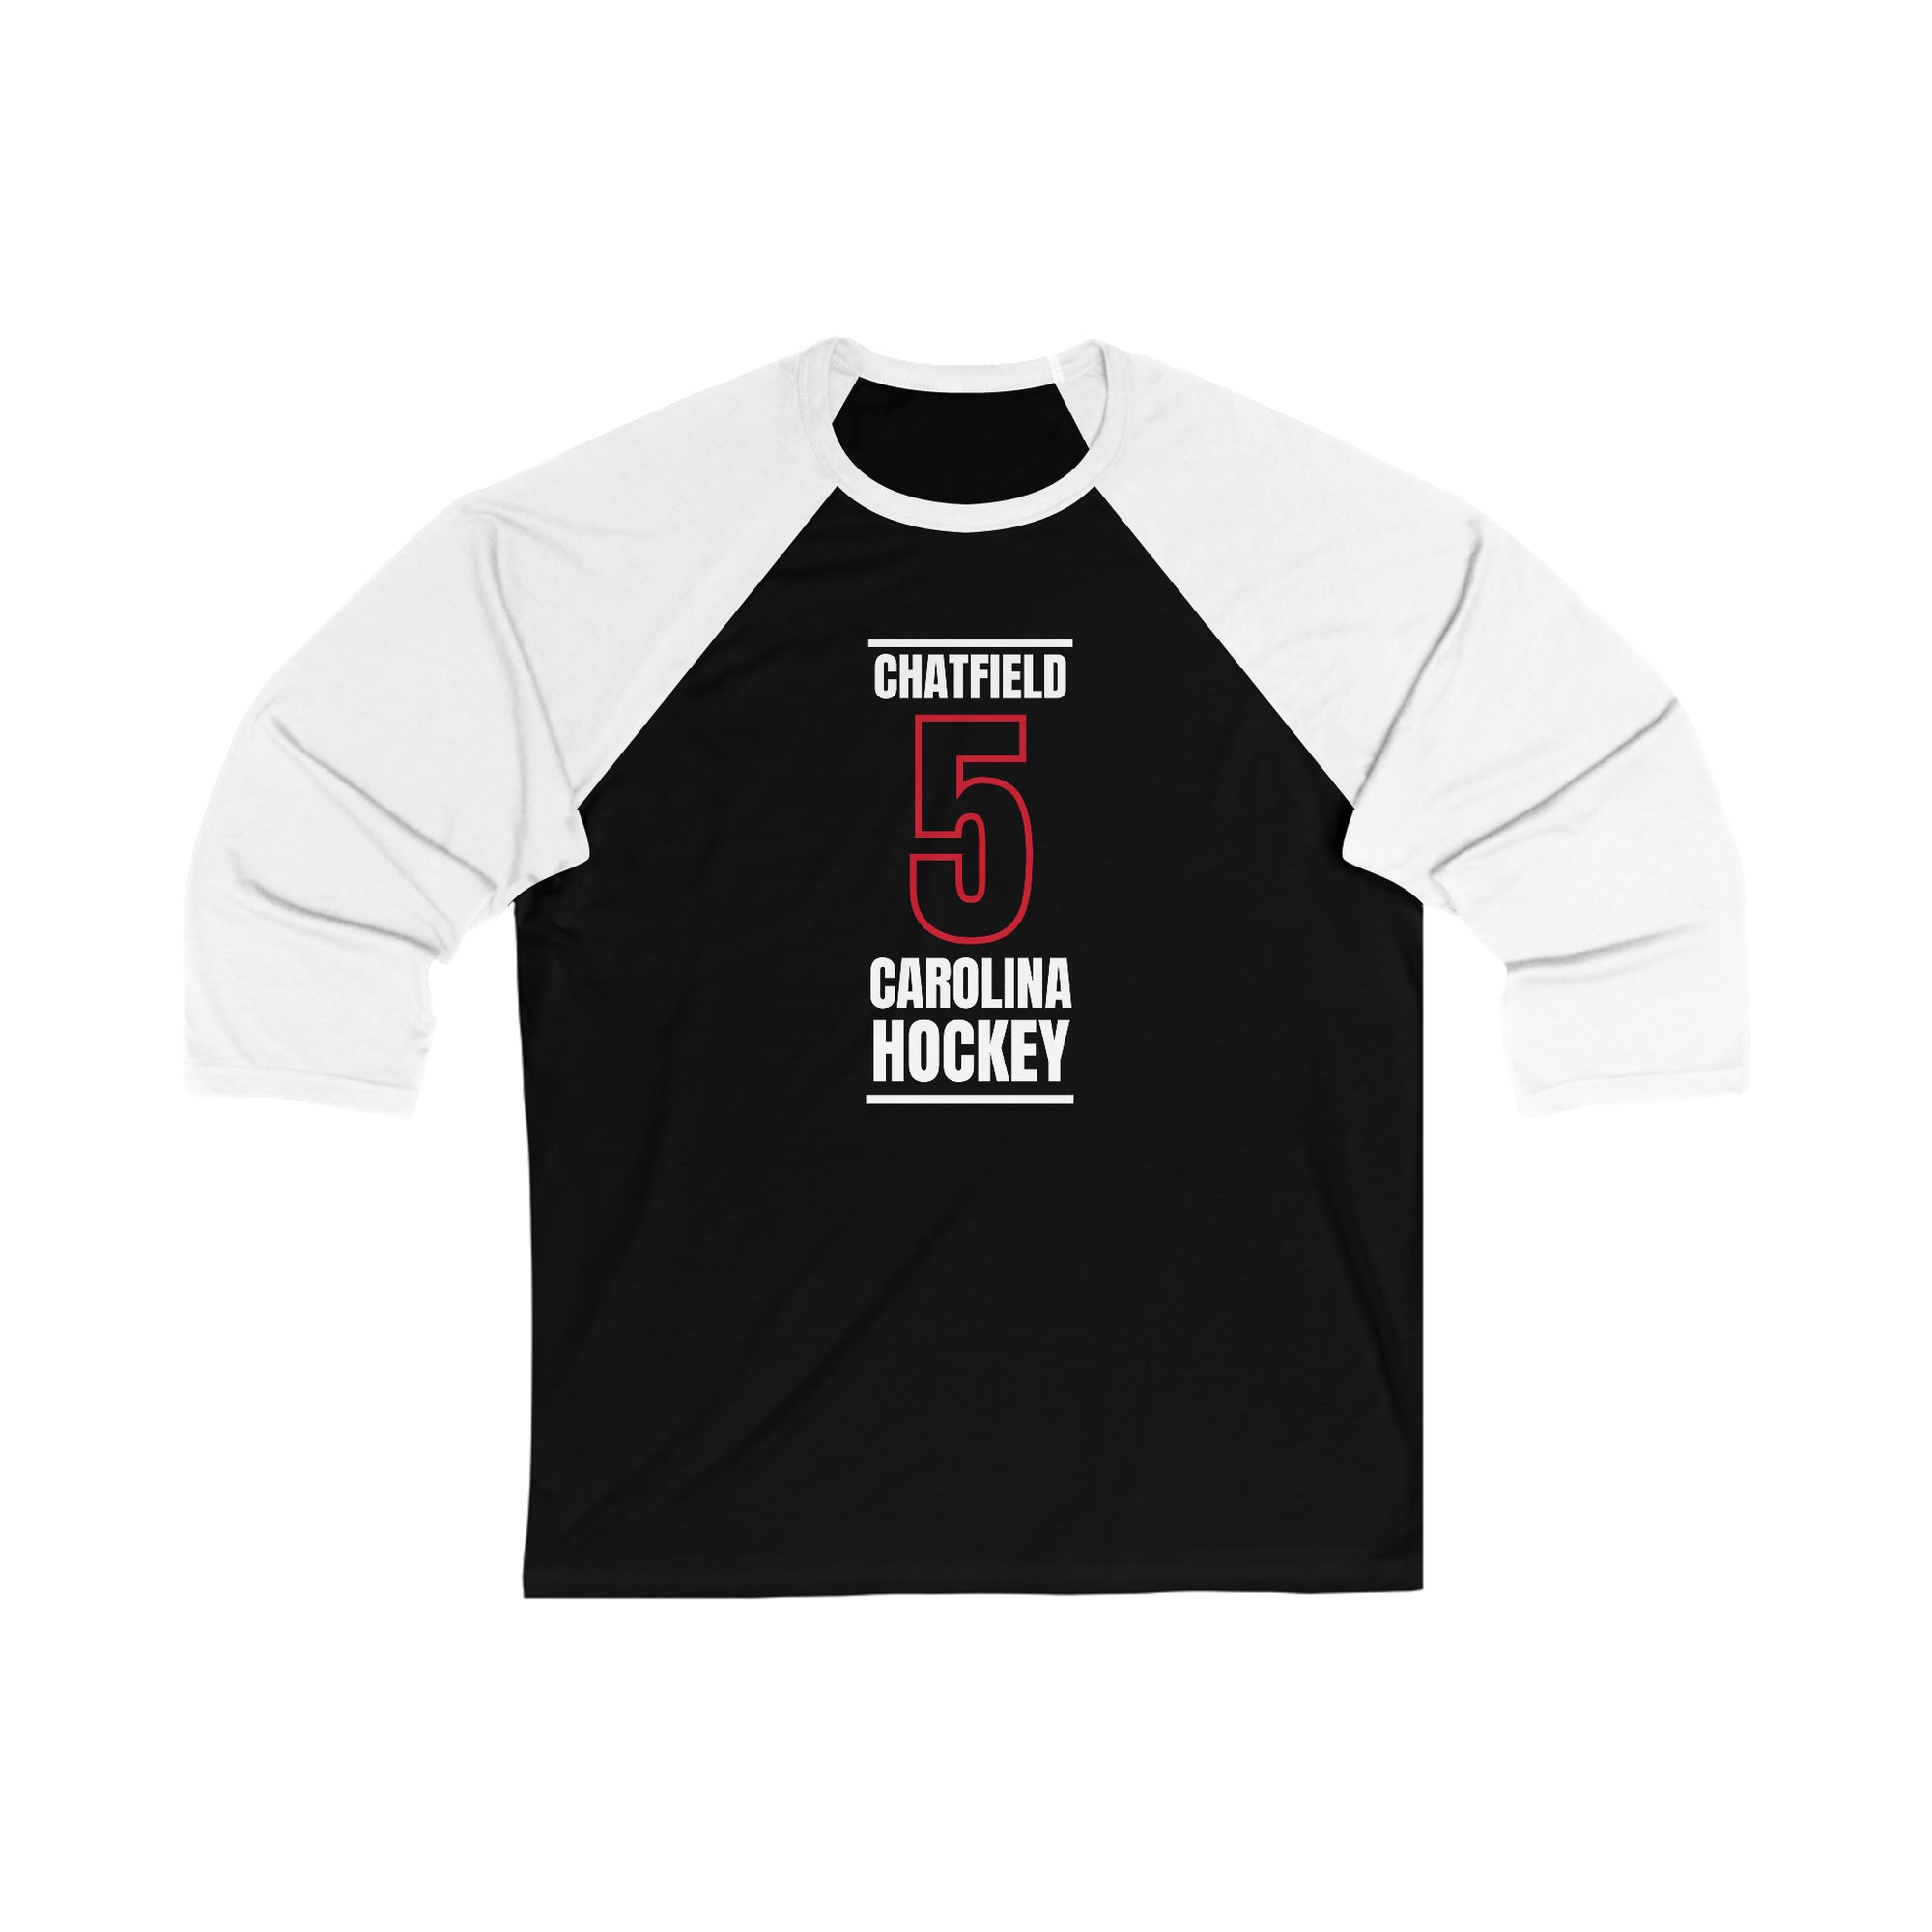 Chatfield 5 Carolina Hockey Black Vertical Design Unisex Tri-Blend 3/4 Sleeve Raglan Baseball Shirt